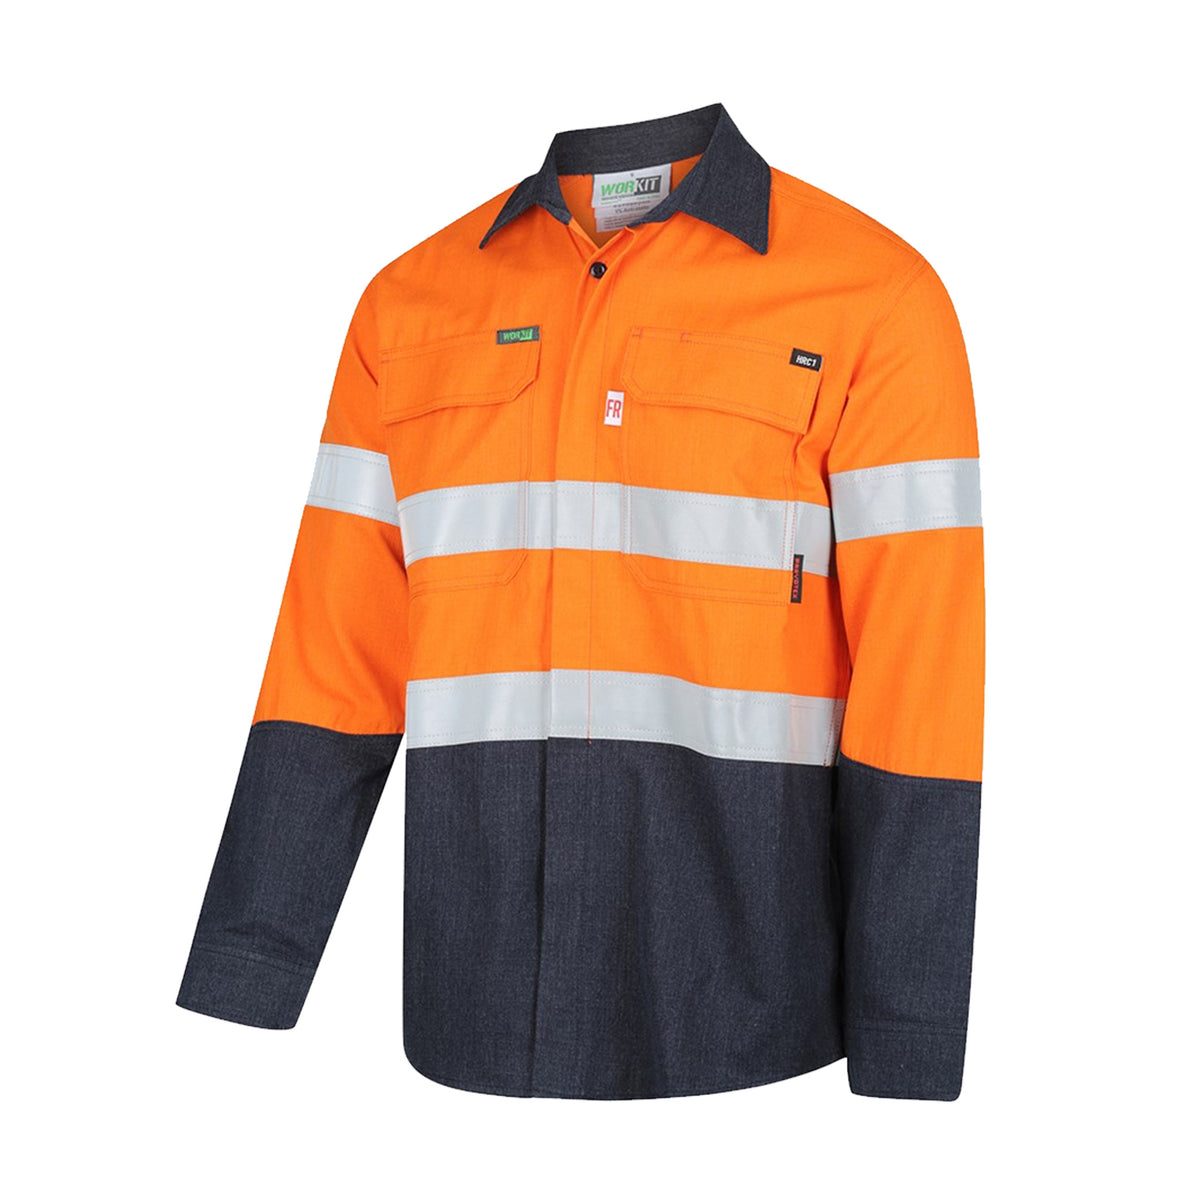 fire retardant hi vis modacrylic inherent lightweight shirt with reflect tape in orange navy